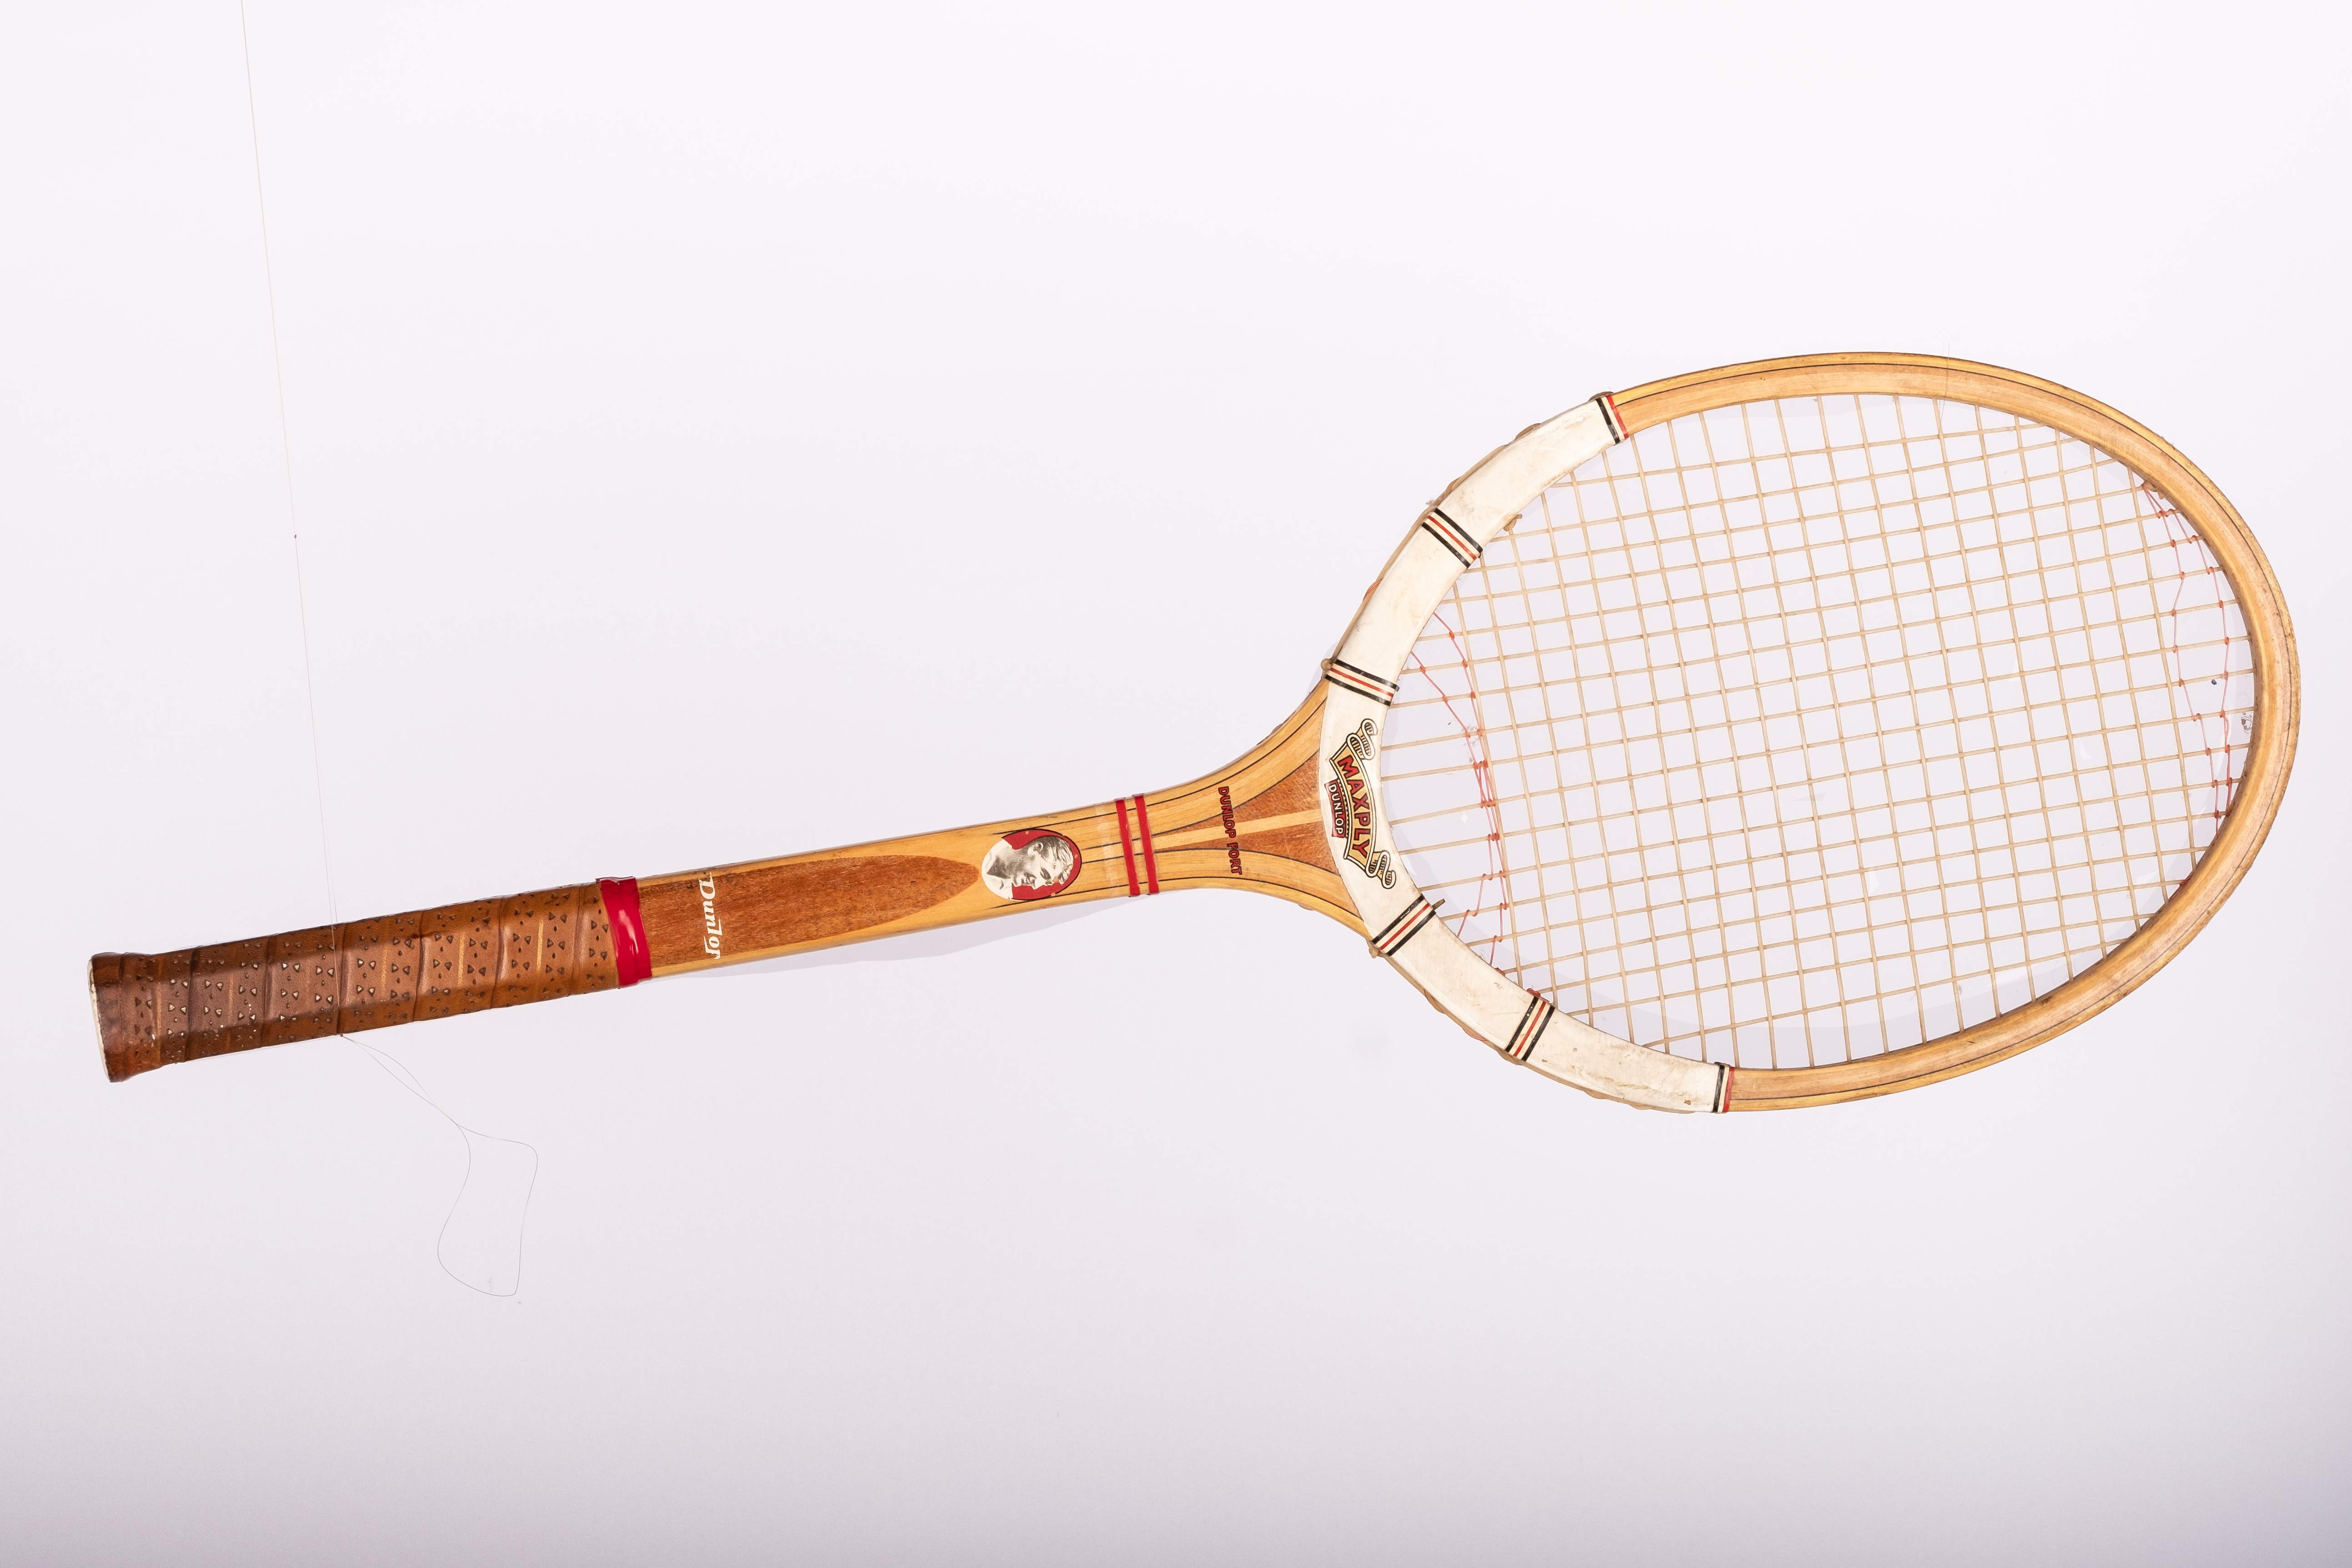 Dunlop Maxply Lew Alan Hoad Tennis Racket